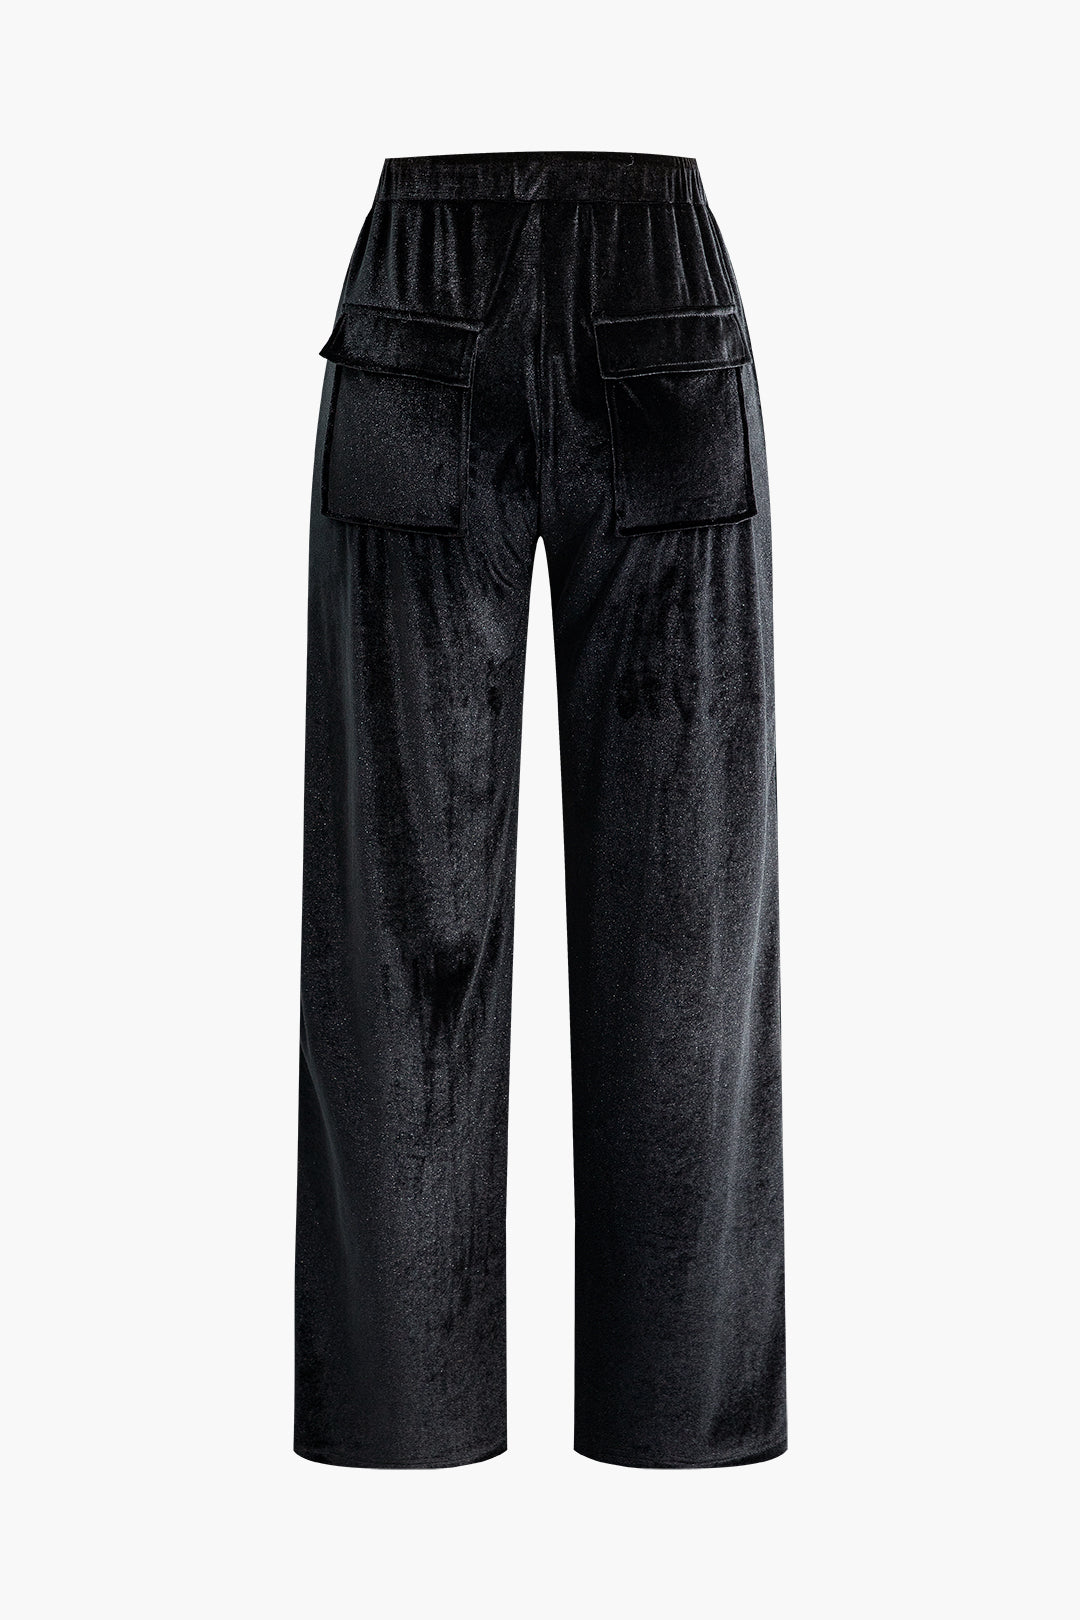 Velvet Drawstring Hooded Zipper Crop Top And Flap Pocket Straight Leg Pants Set